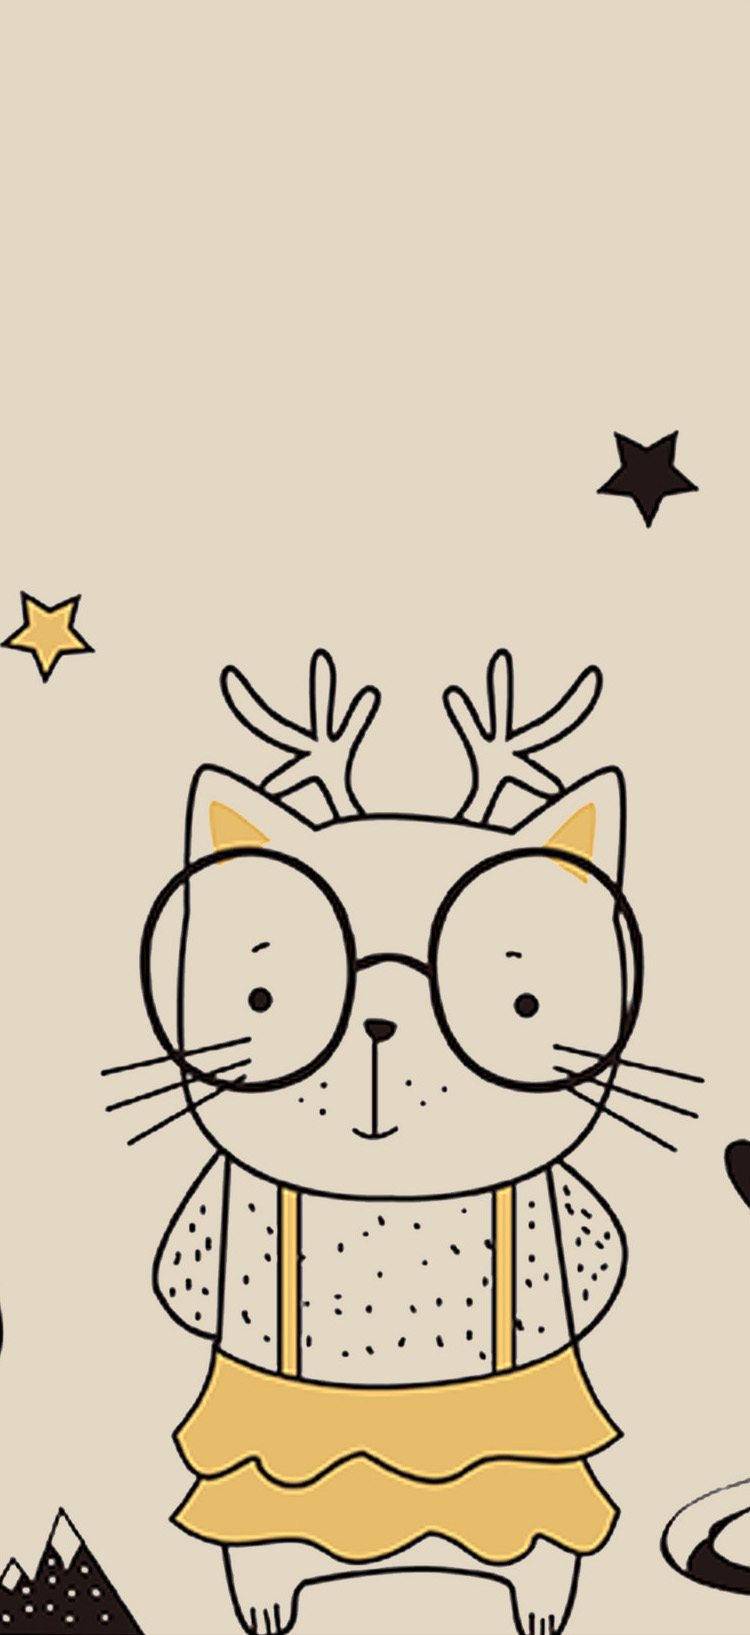 Hình nền điện thoại Chibi cute | Cute cartoon wallpapers, Cute doodles,  Cartoon wallpaper